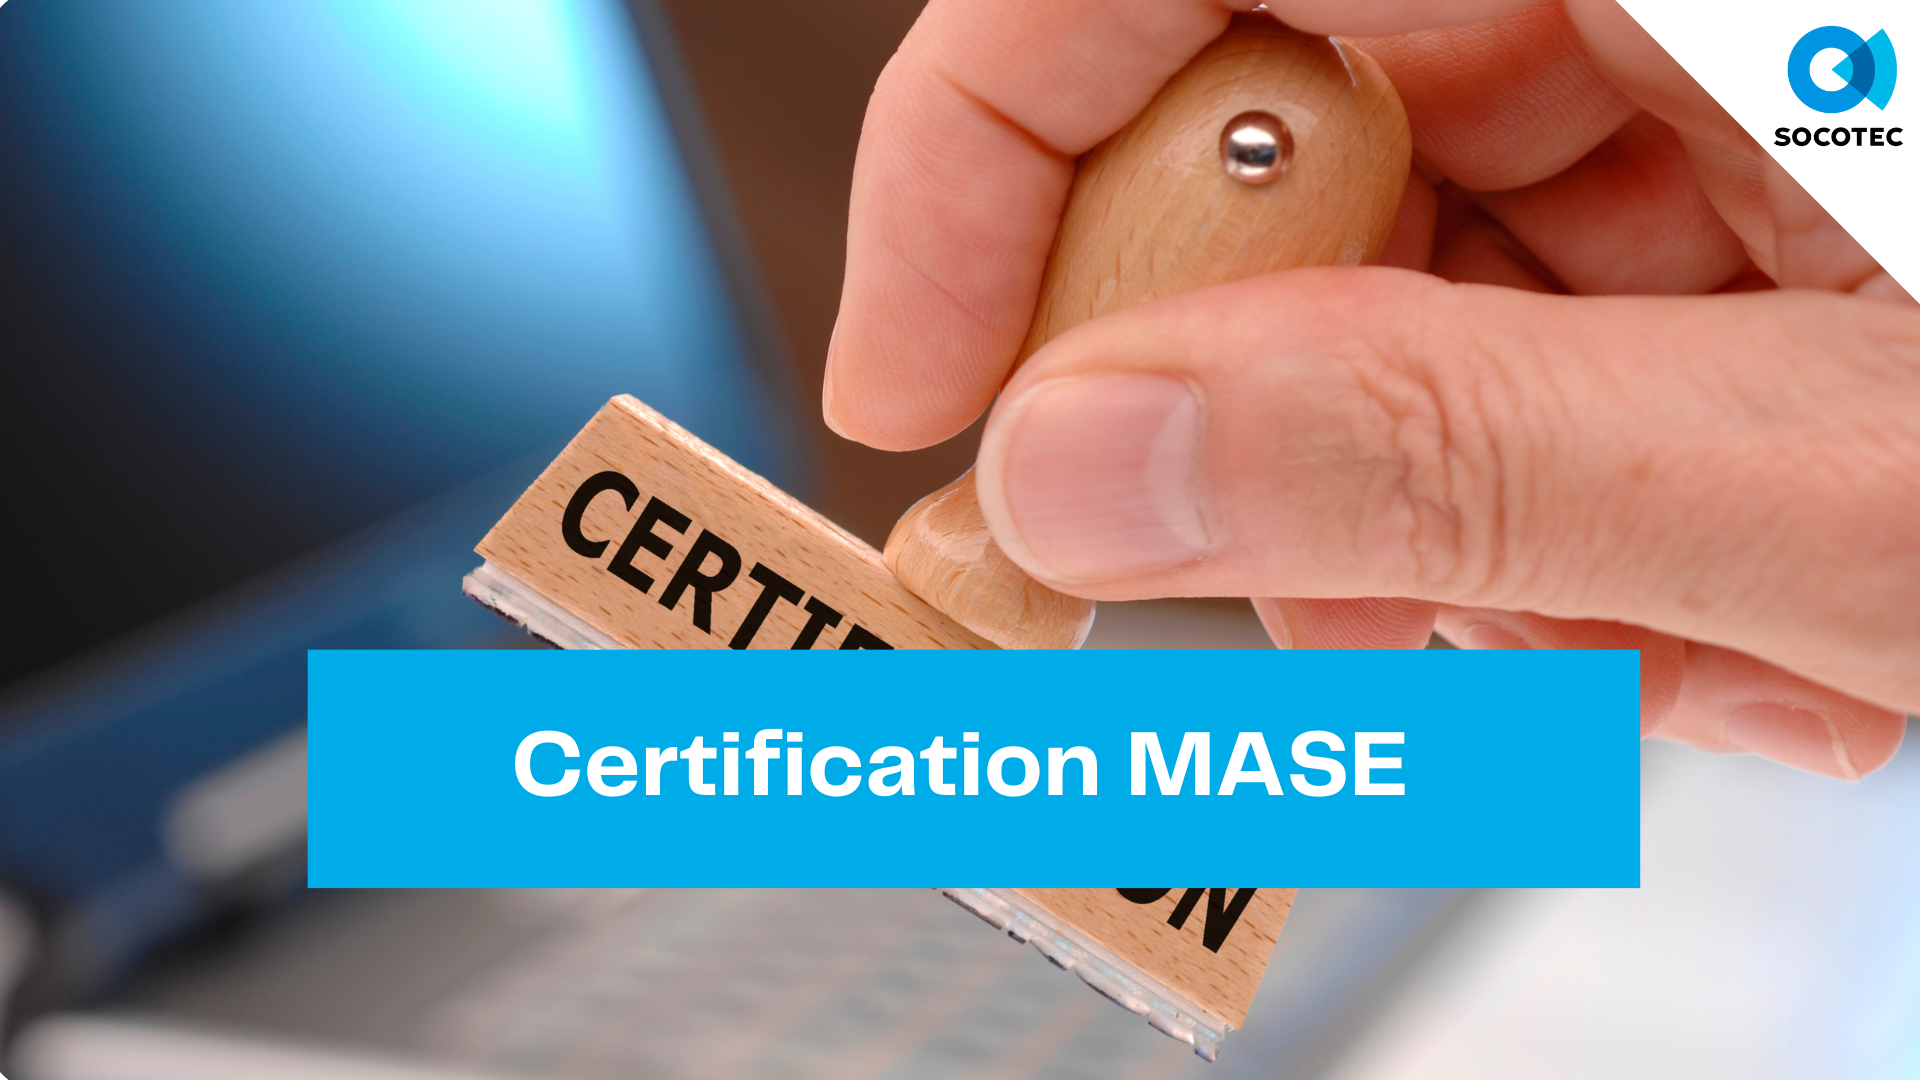 SOCOTEC Formation Marseille obtient la certification MASE